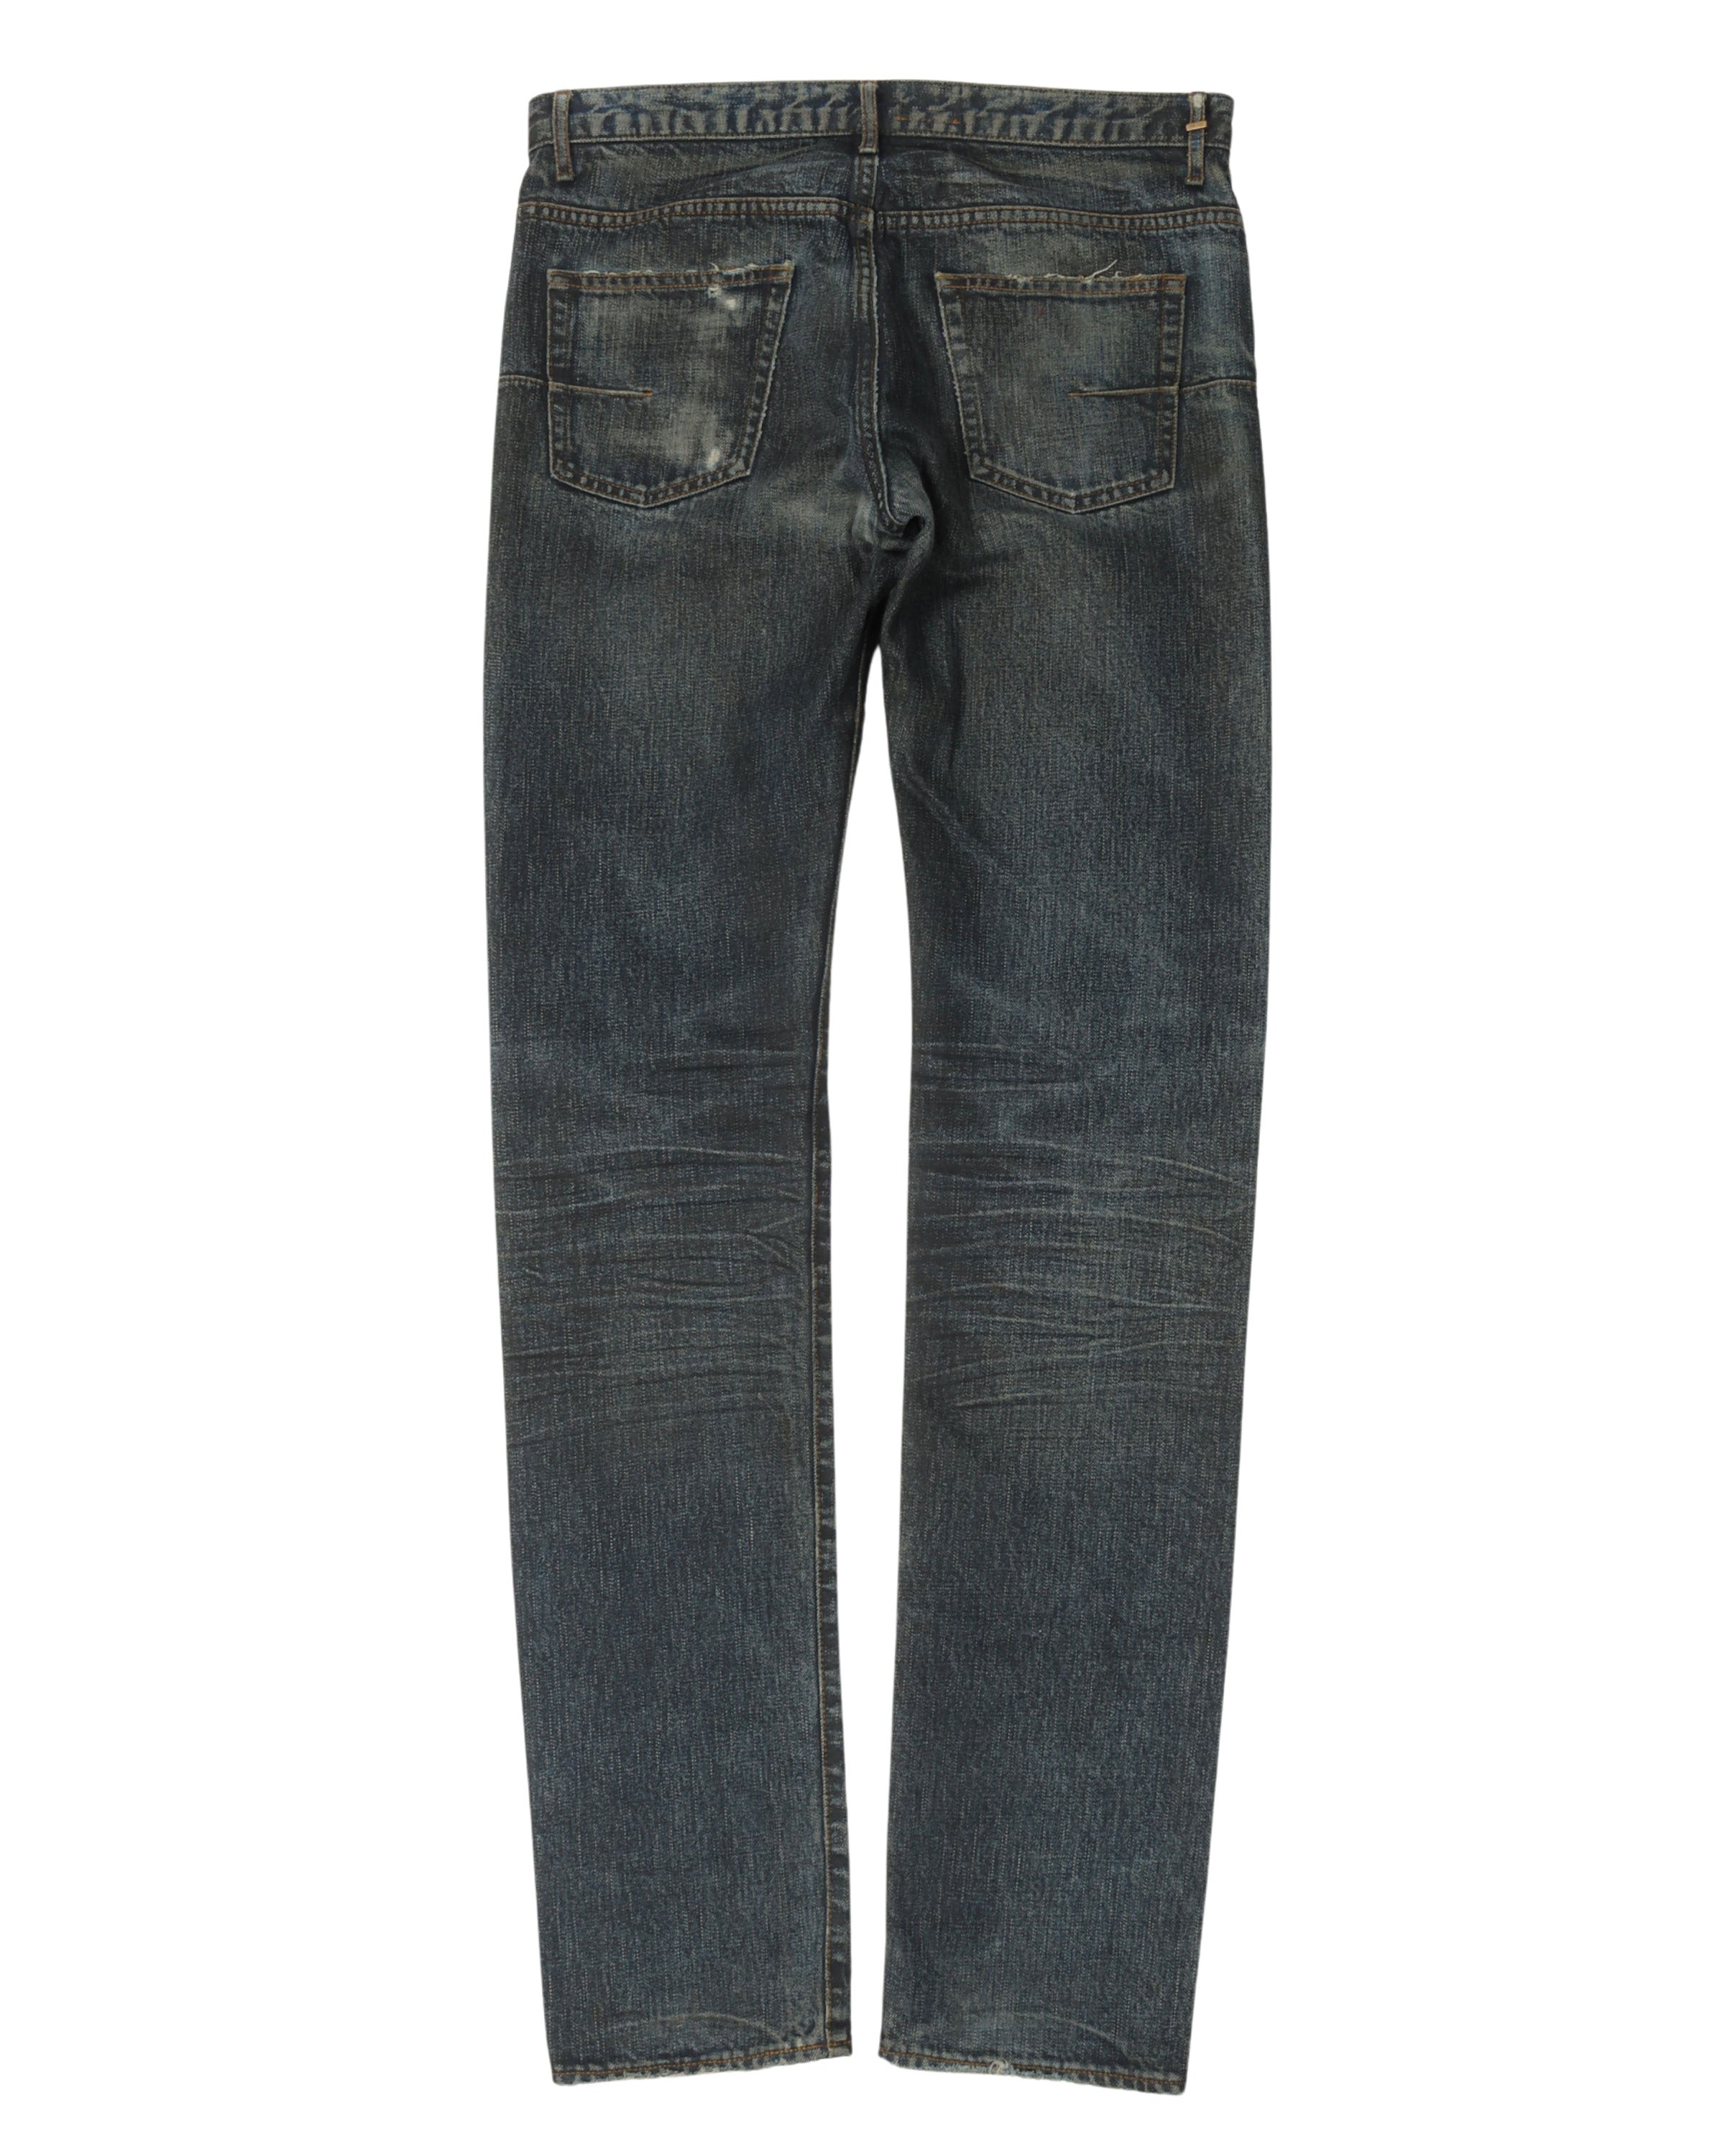 SS04 Dark Wash Waxed Skinny Jeans